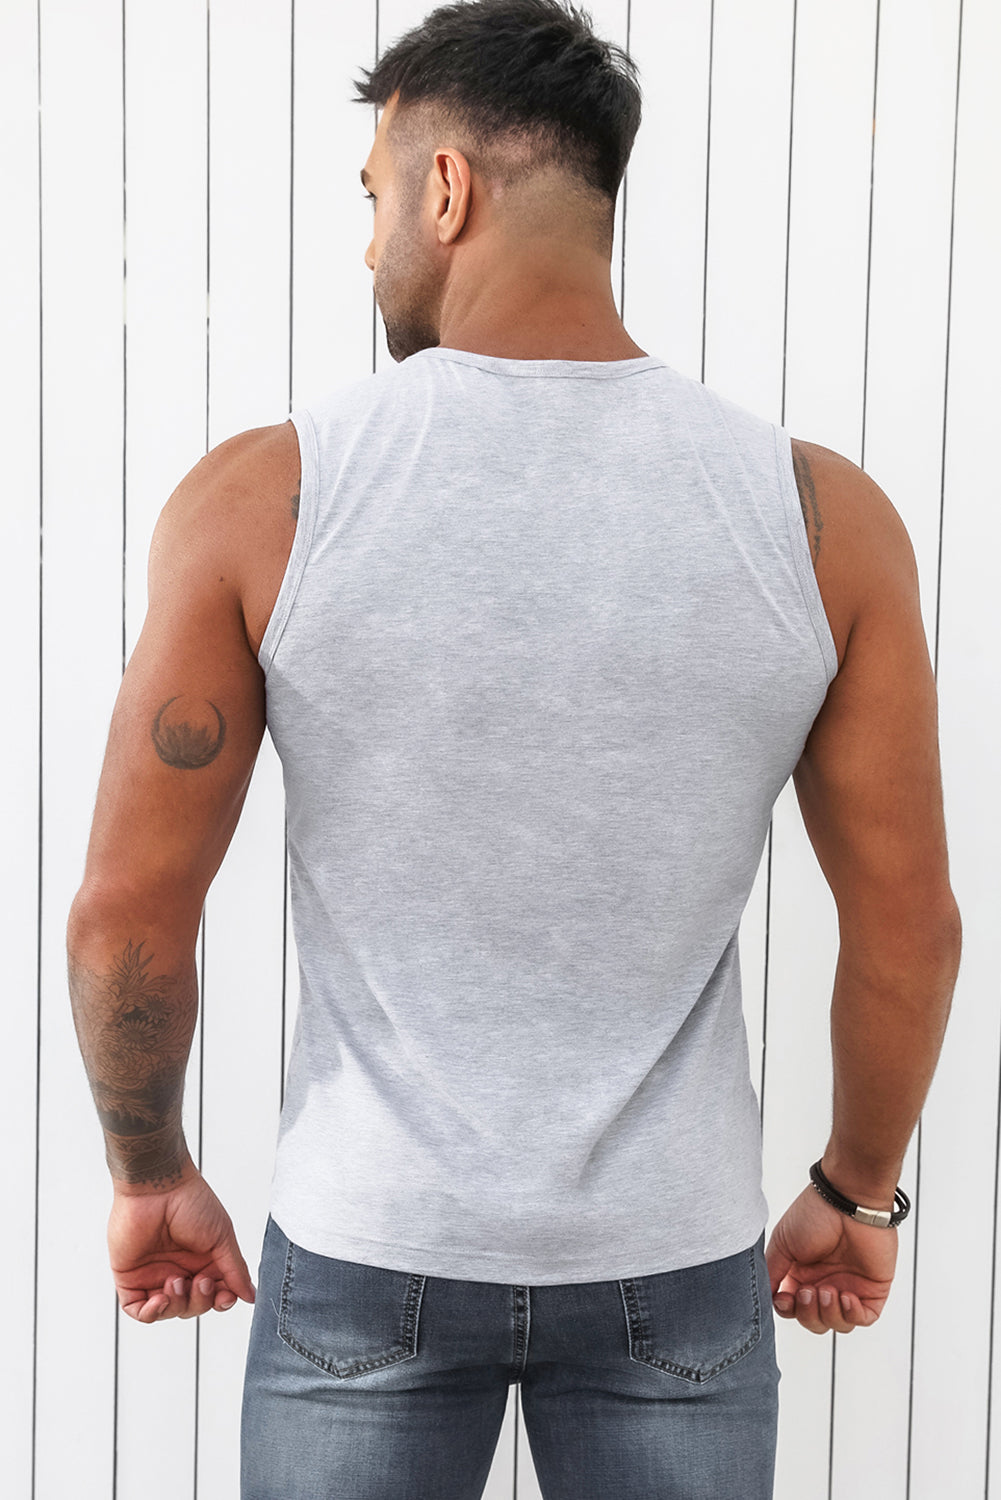 Gray BULL SHIRT Graphic Print Muscle Fit Men's Tank Top Men's Tops JT's Designer Fashion